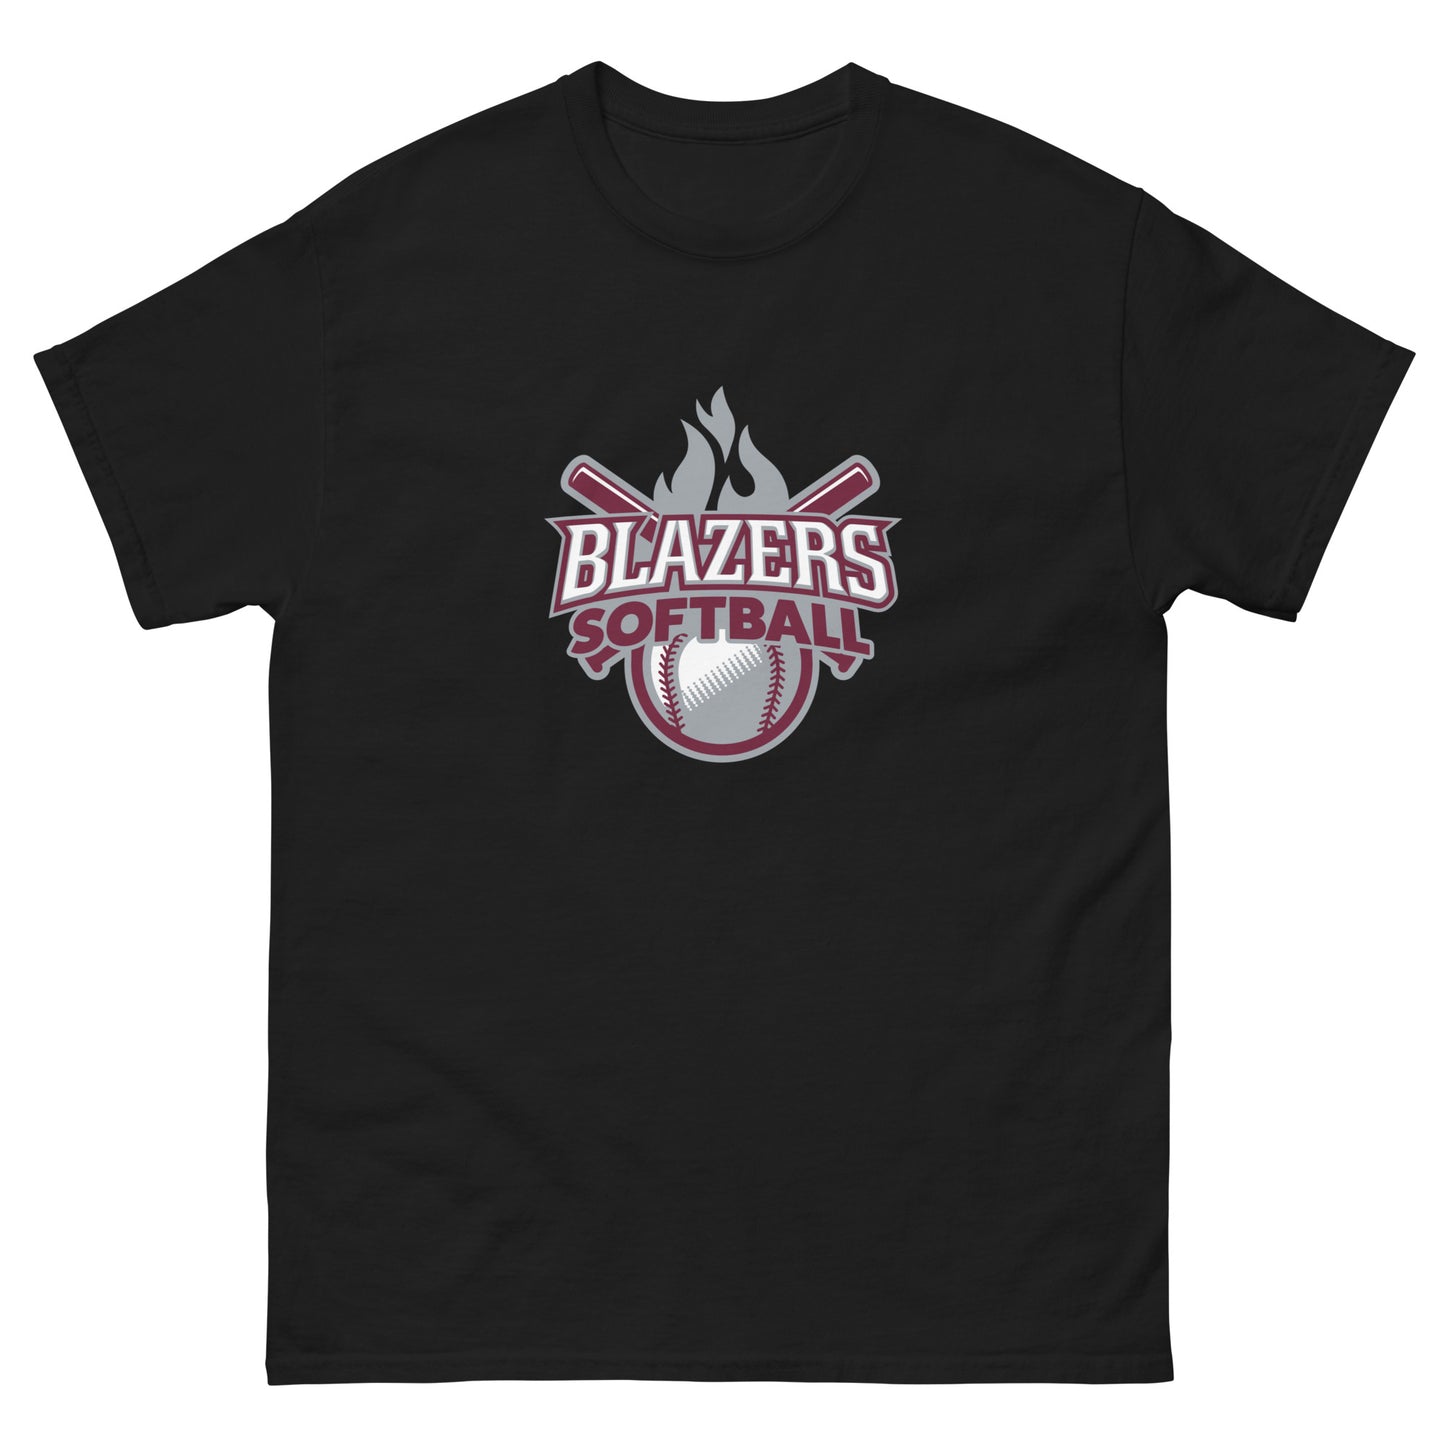 Blazers Softball Unisex Short-Sleeve T-Shirt (Gildan)